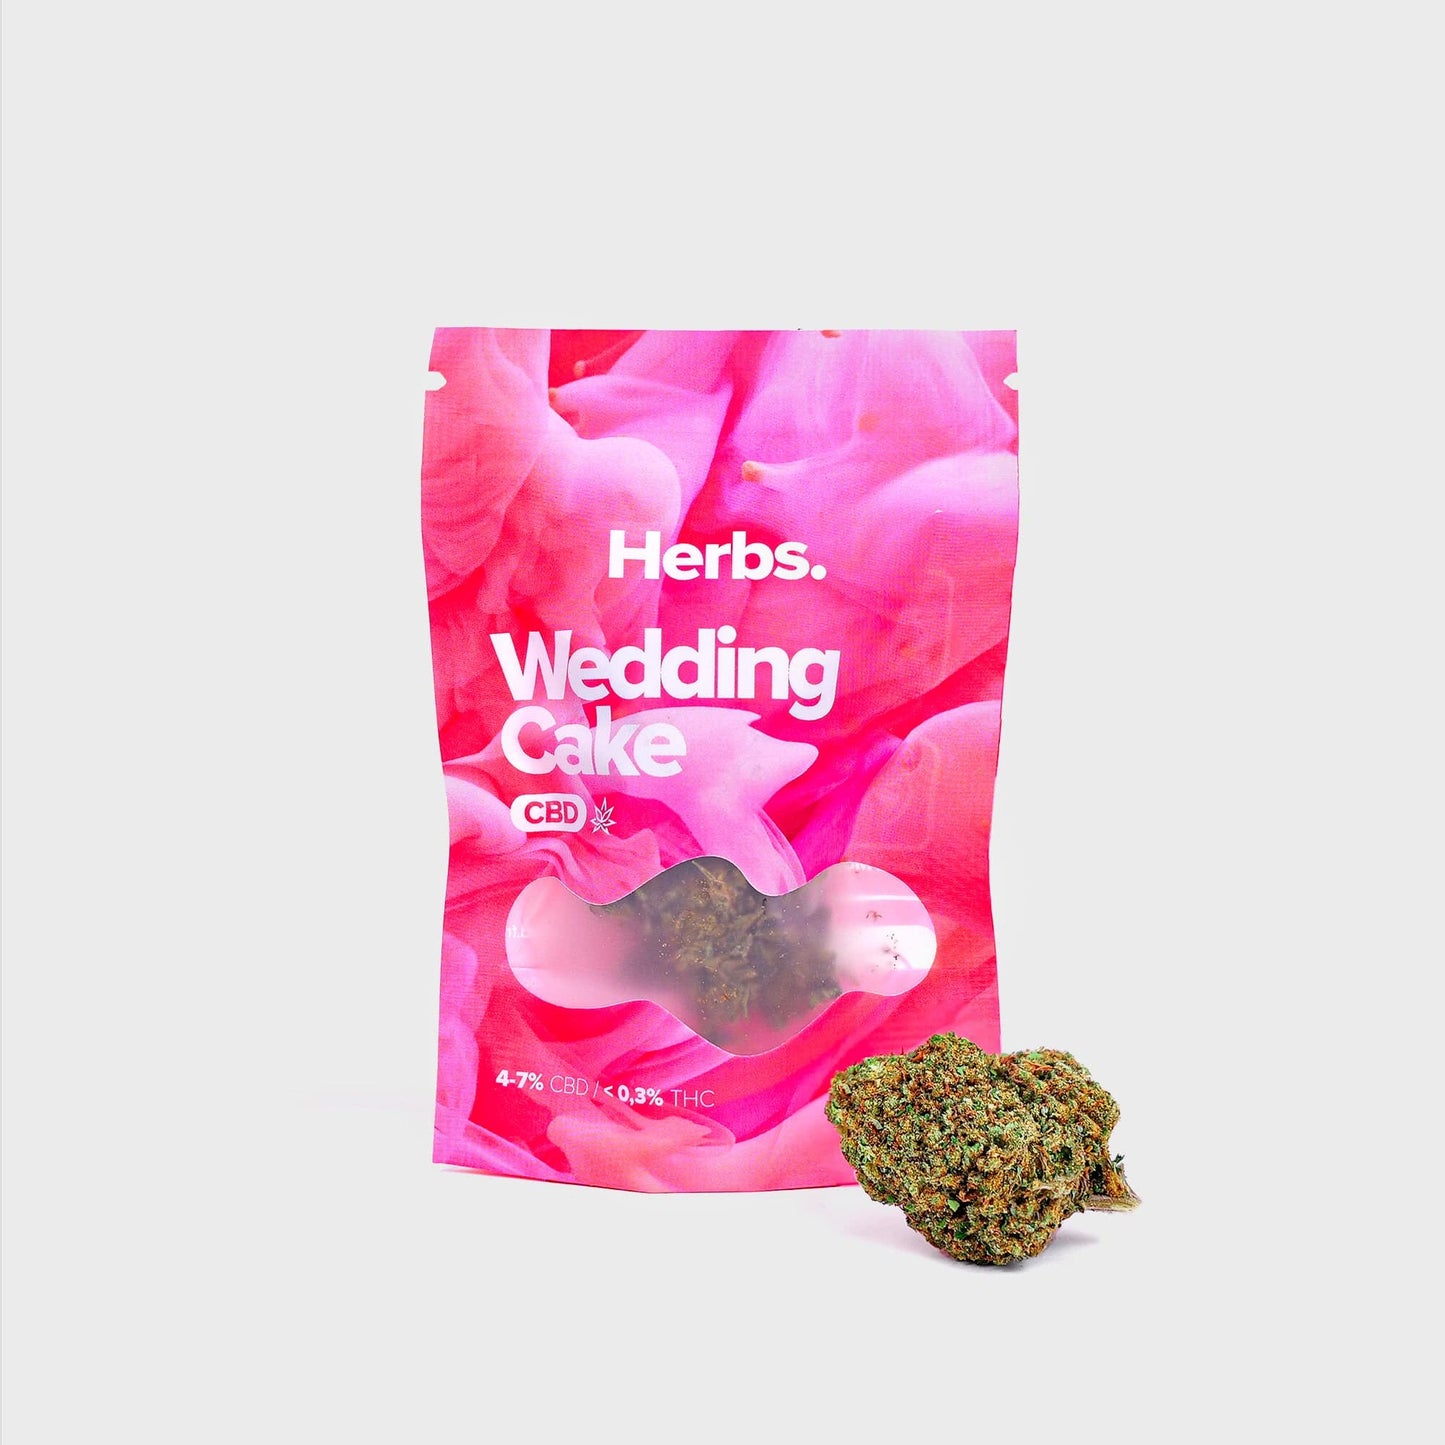 wedding-cake-cbd-herbs-pack-produit